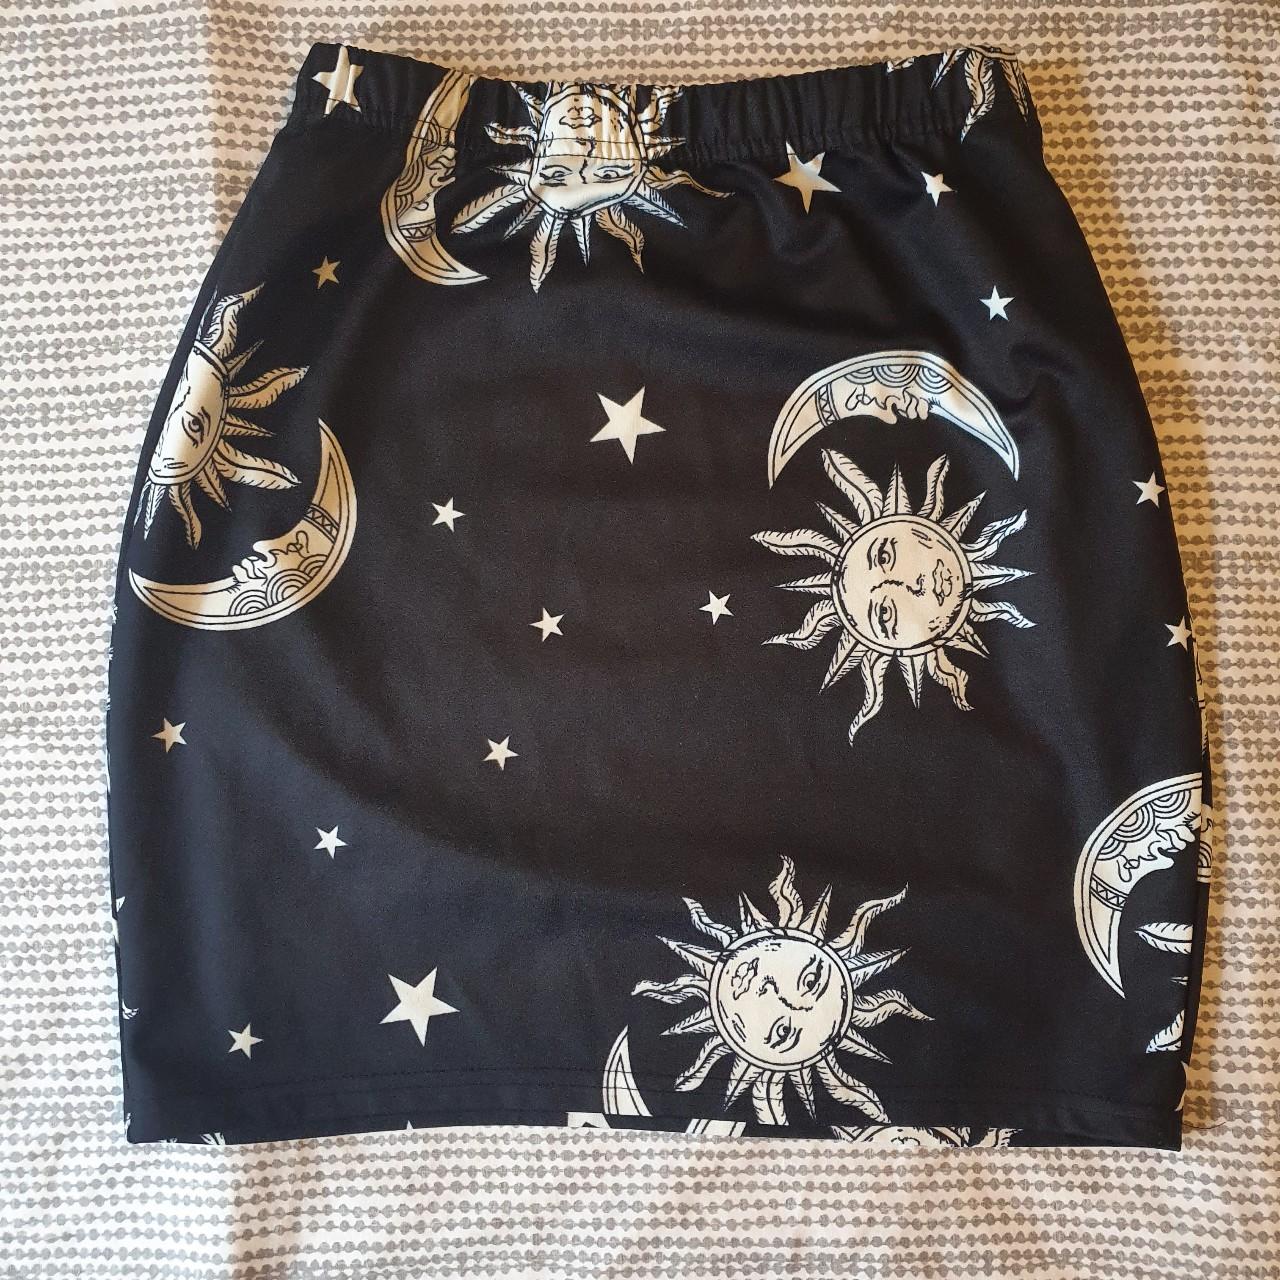 Moon and stars mini skirt, elasticated waist. Size... - Depop